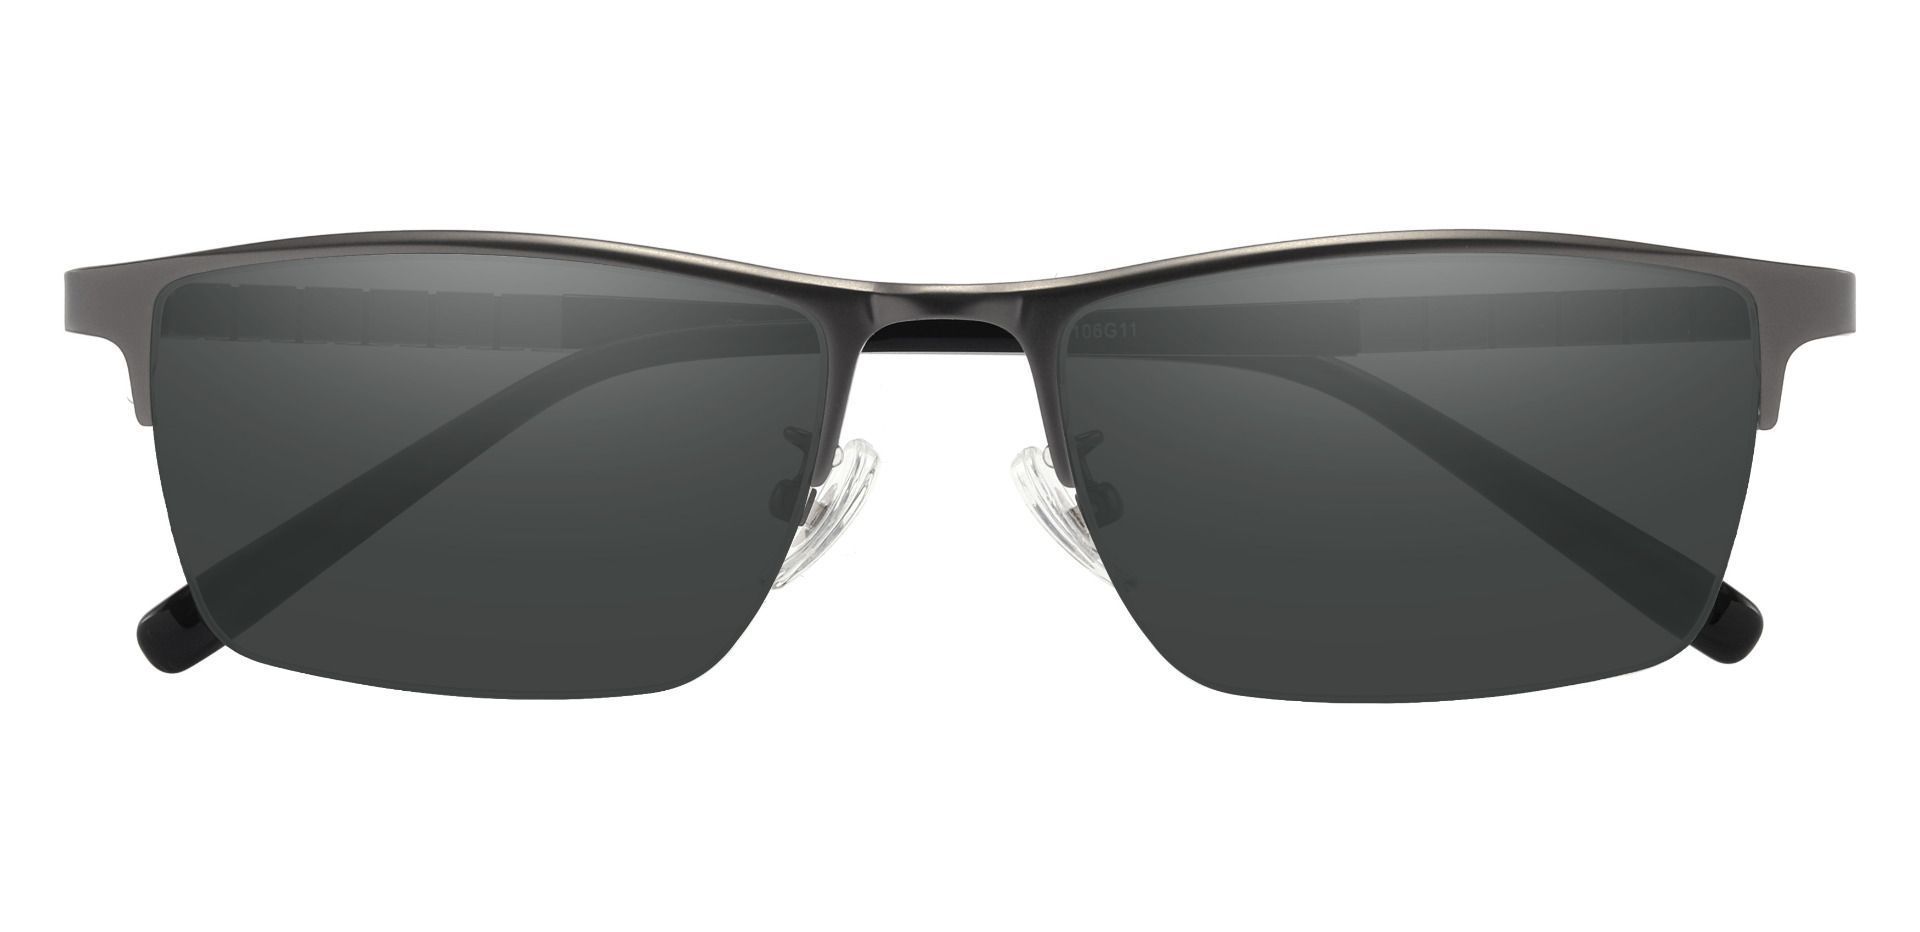 Maine Rectangle Progressive Sunglasses - Gray Frame With Gray Lenses